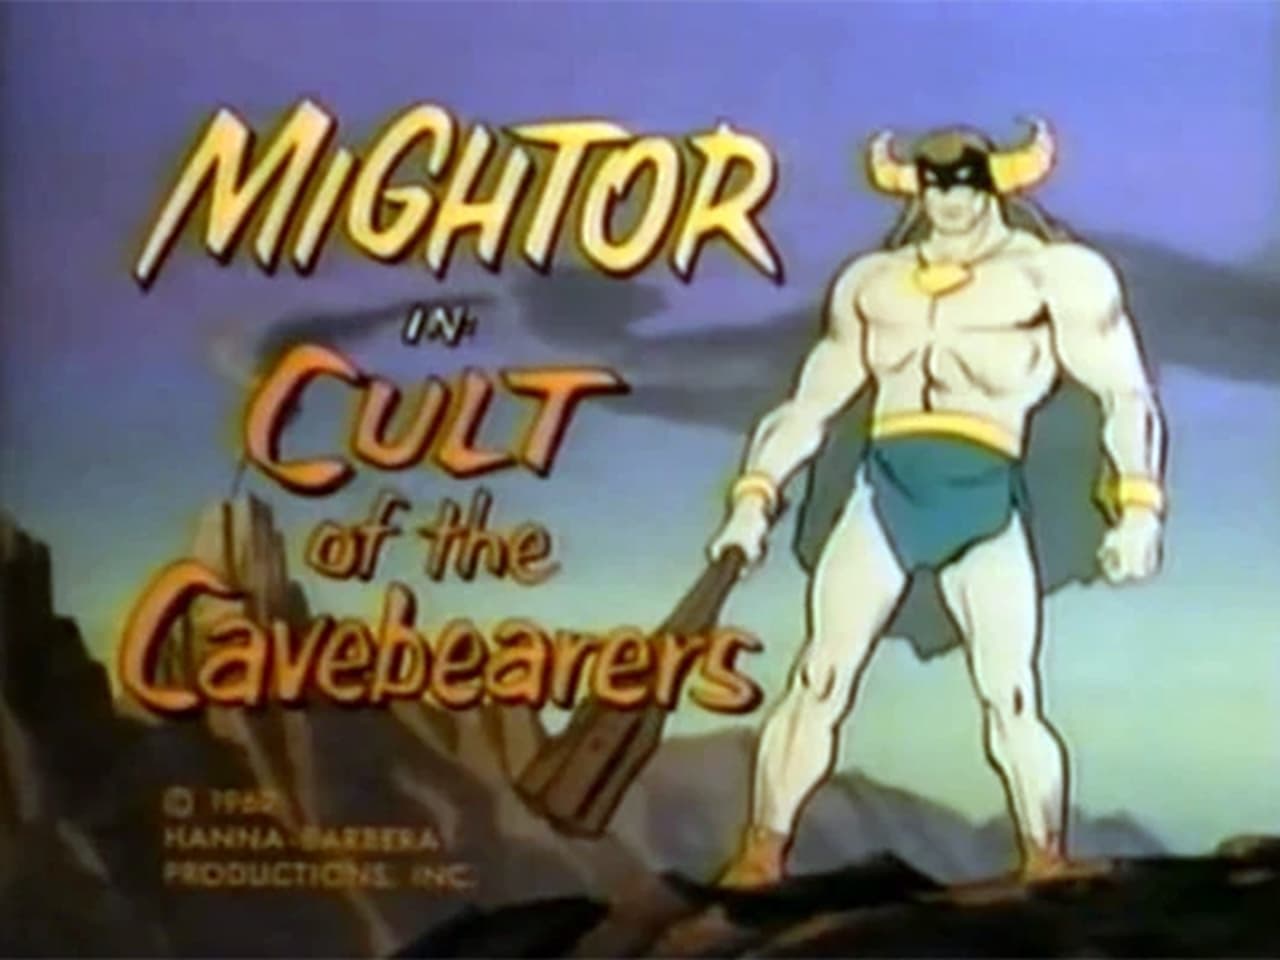 Cult Of Cavebearers